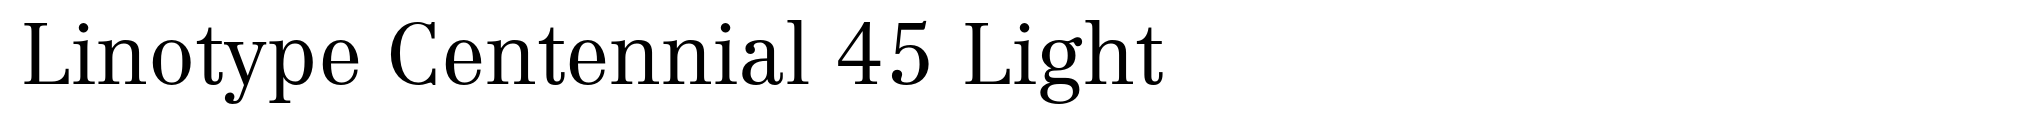 Linotype Centennial 45 Light image